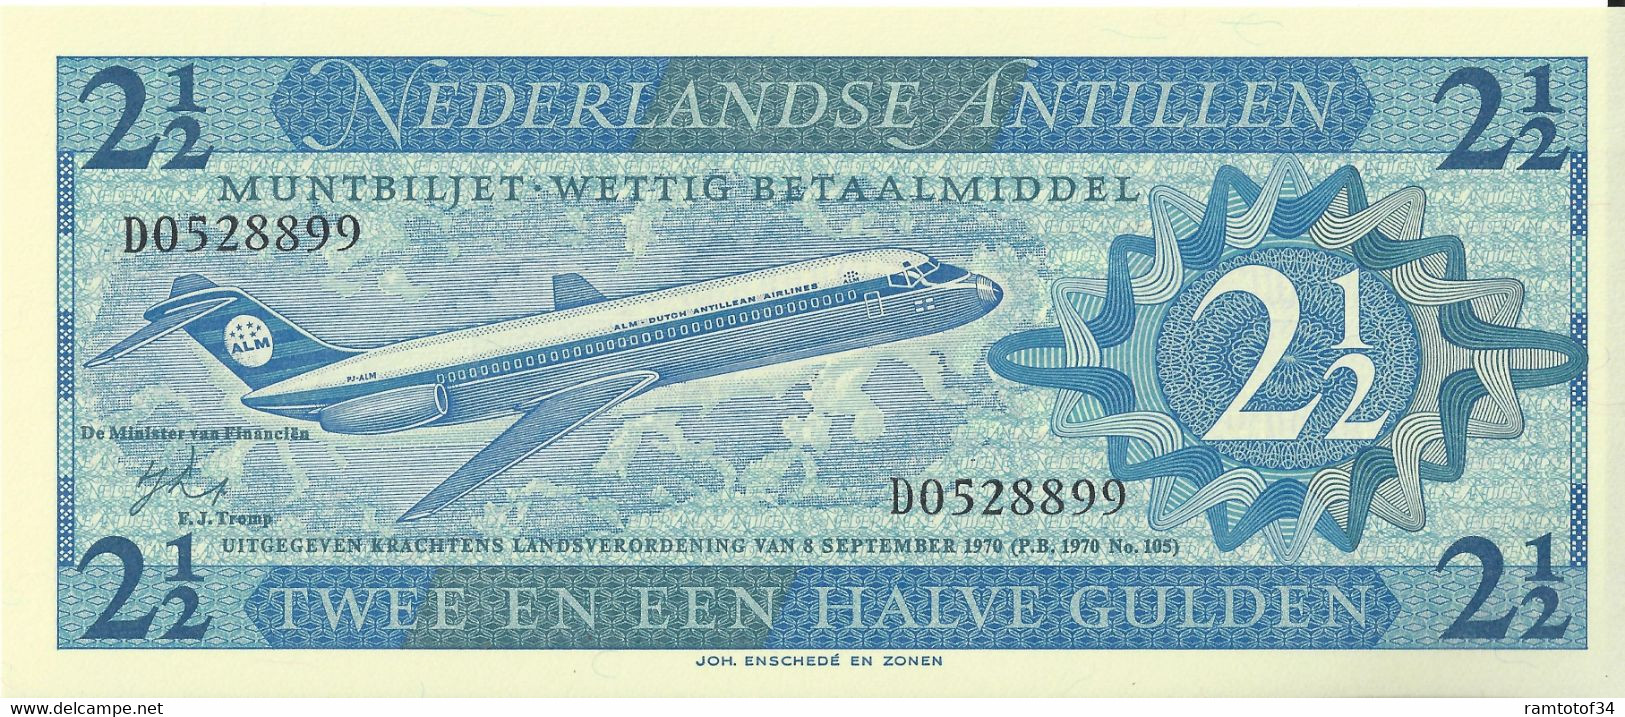 NEDERLANDLANDSE ANTILLEN - 2.5 Gulden 1970 UNC - Netherlands Antilles (...-1986)